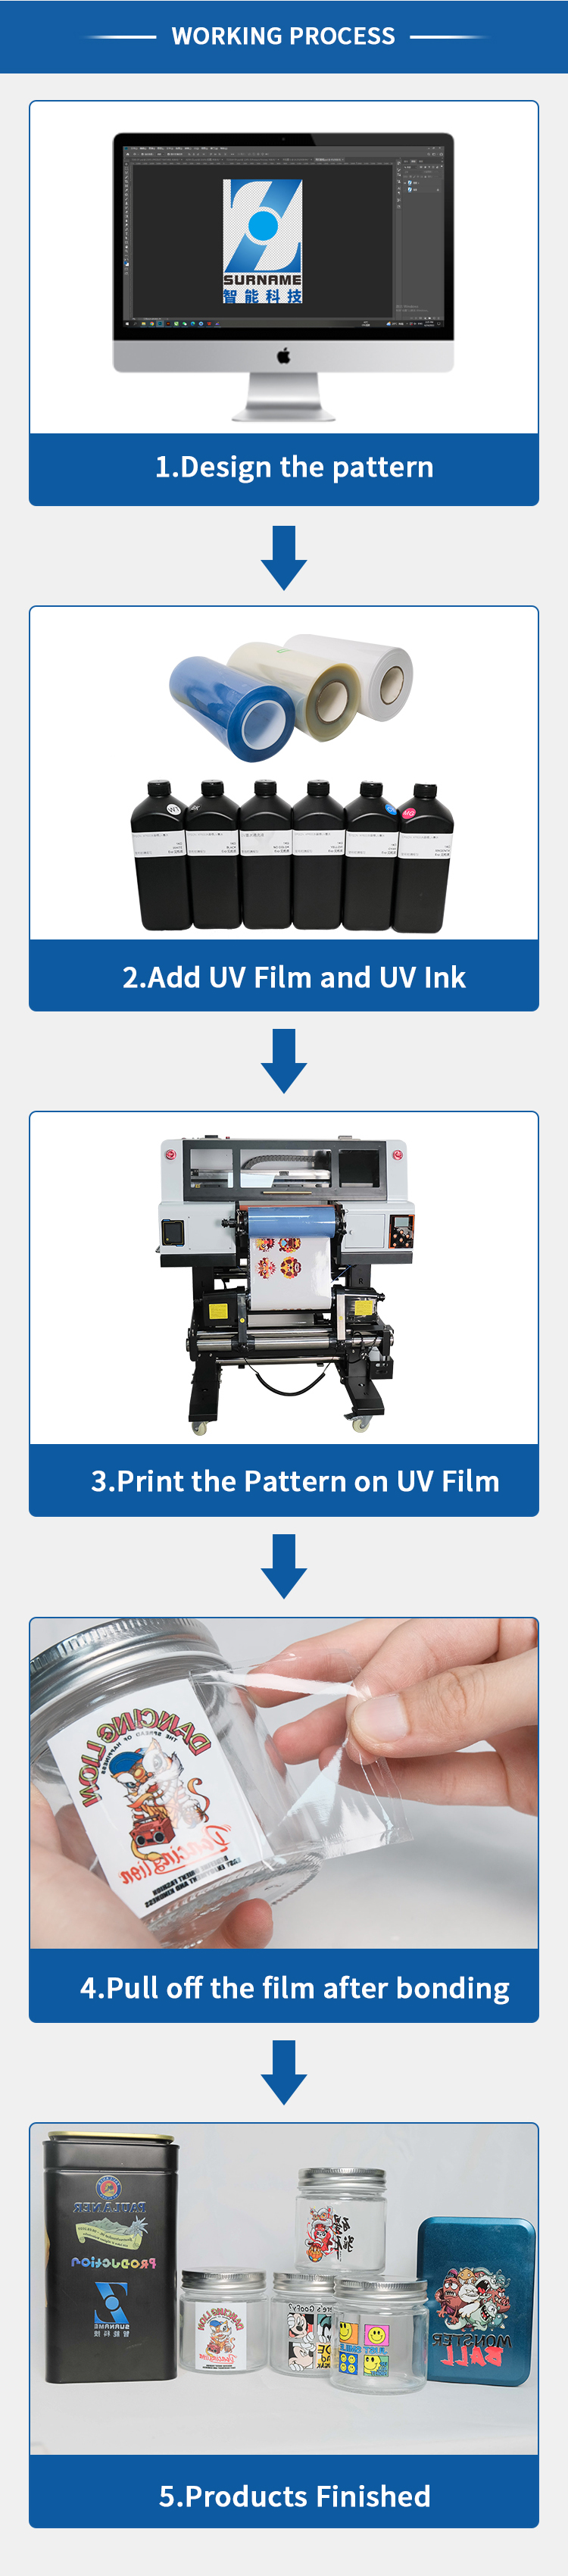 Workflow of A3 UV dtf printer